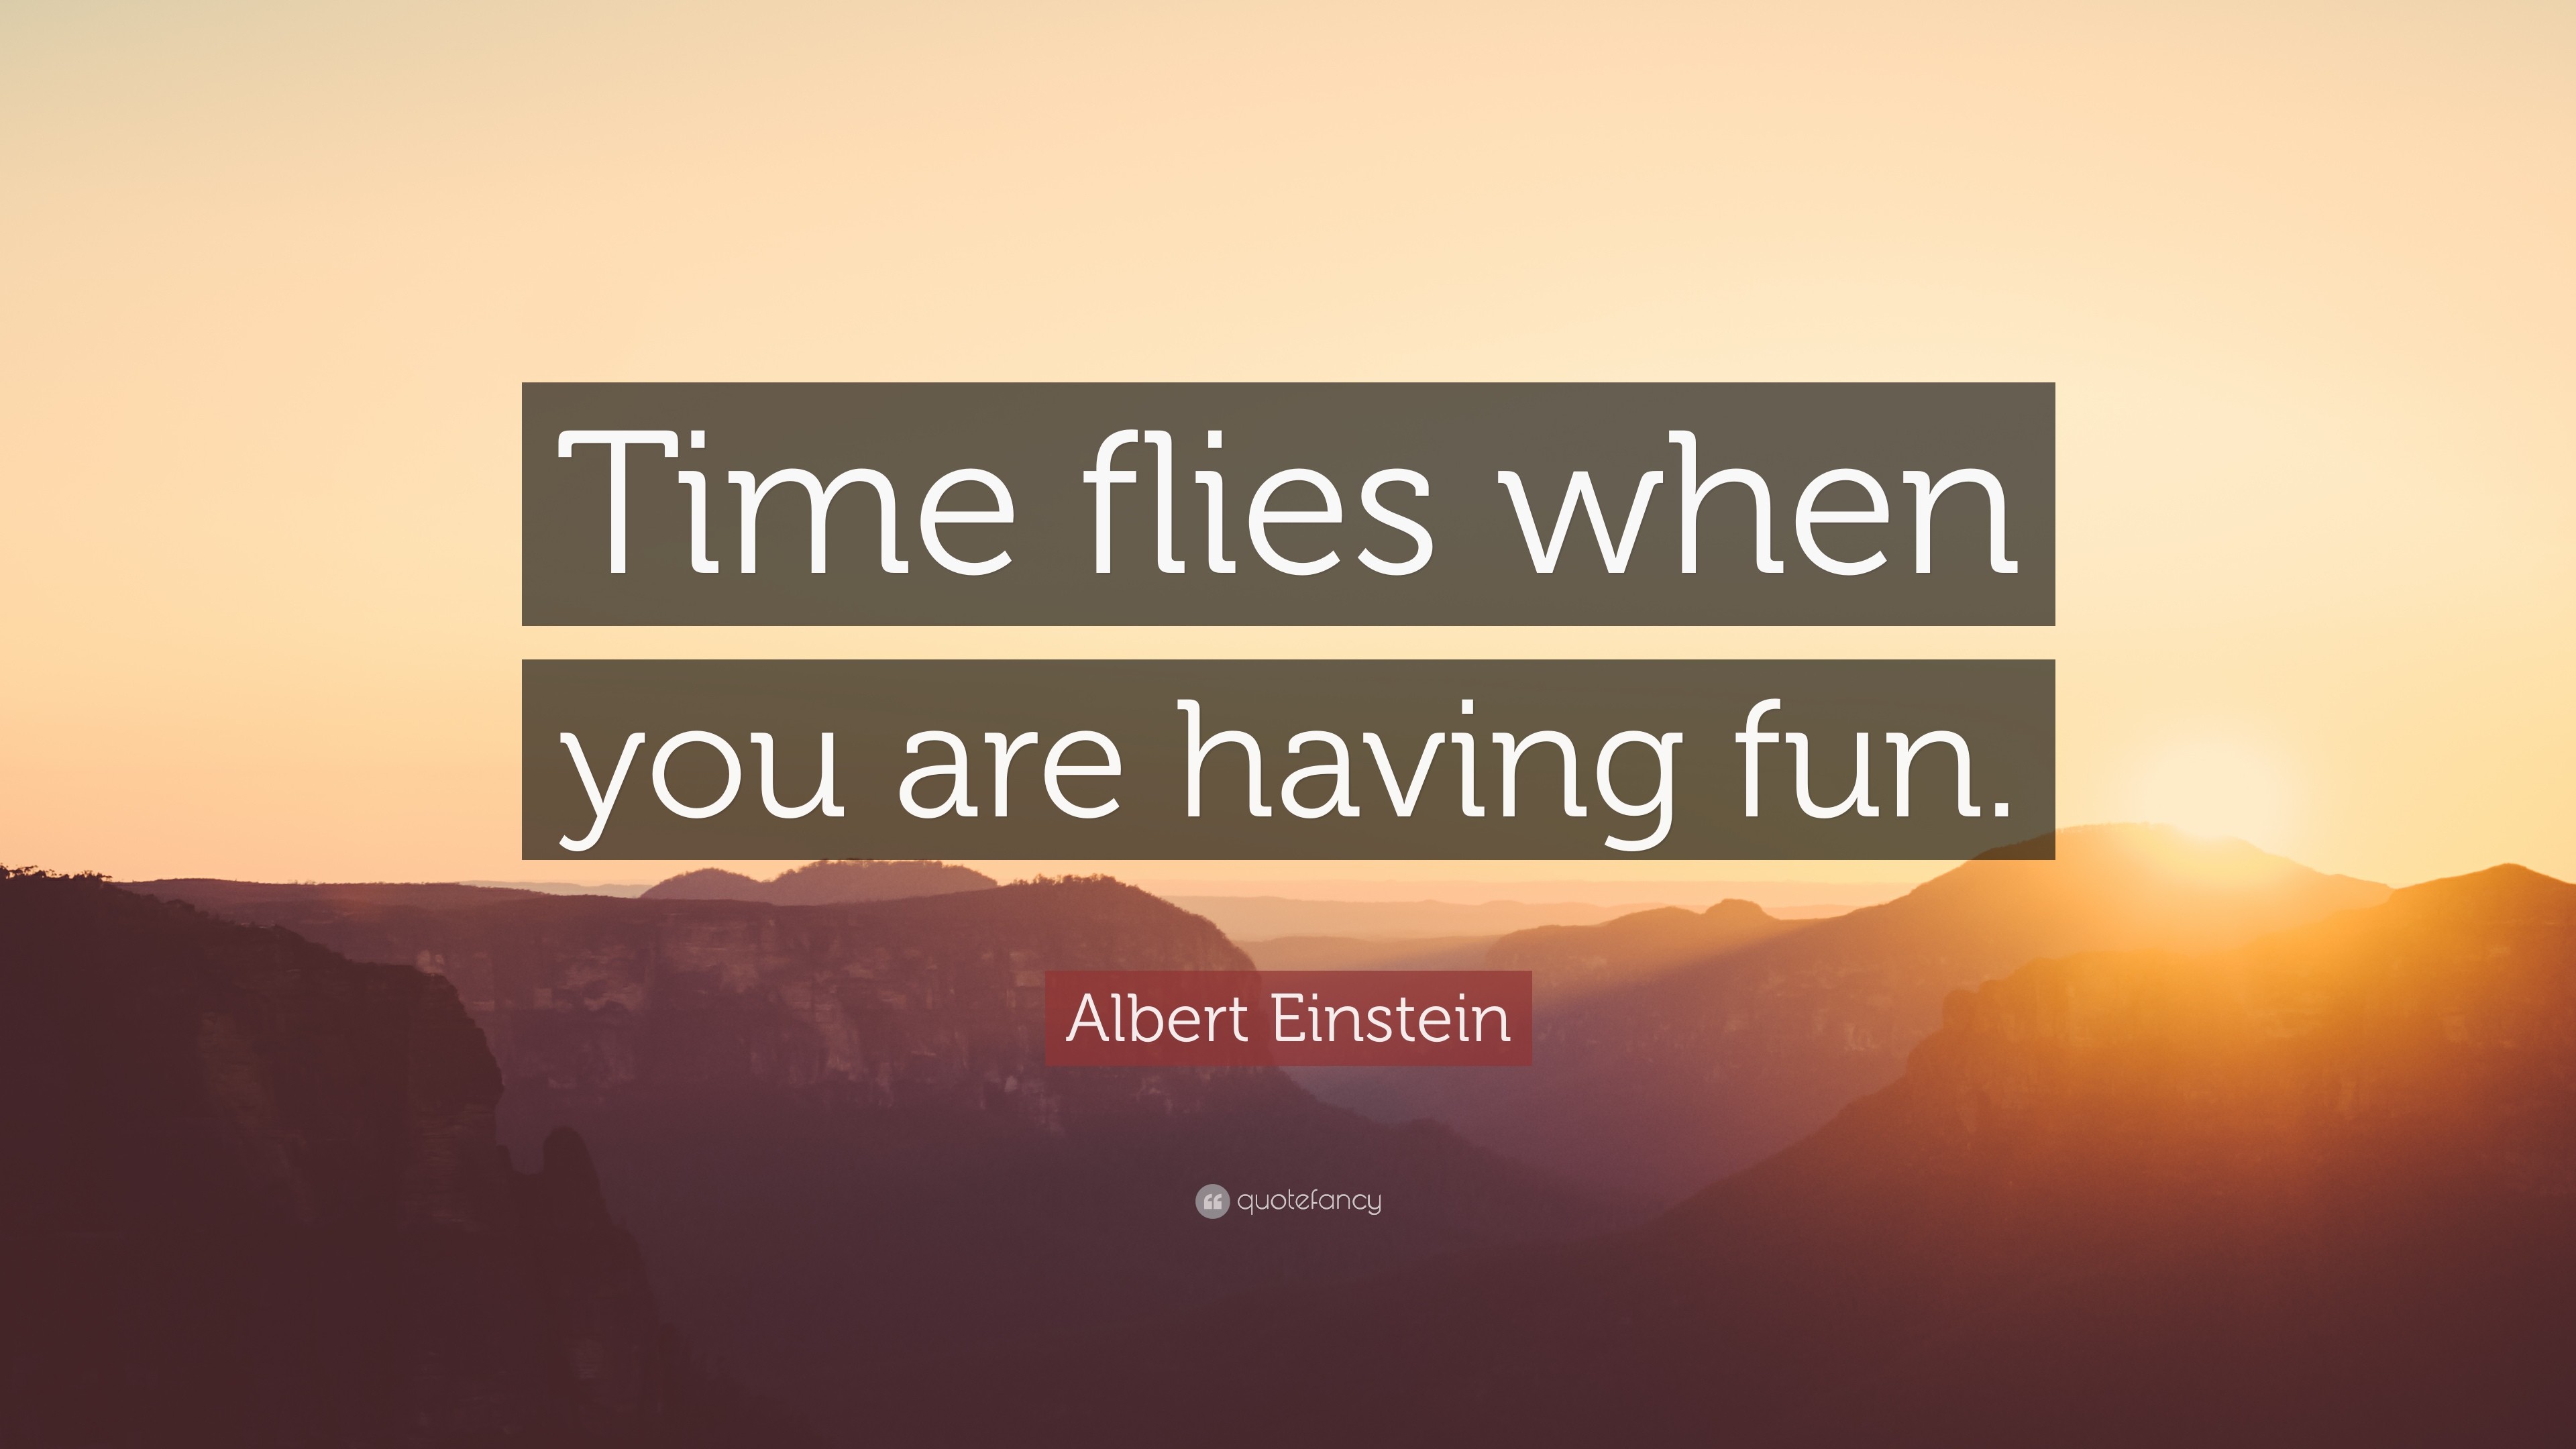 3840x2160 Albert Einstein Quote: “Time flies when you are having fun.”